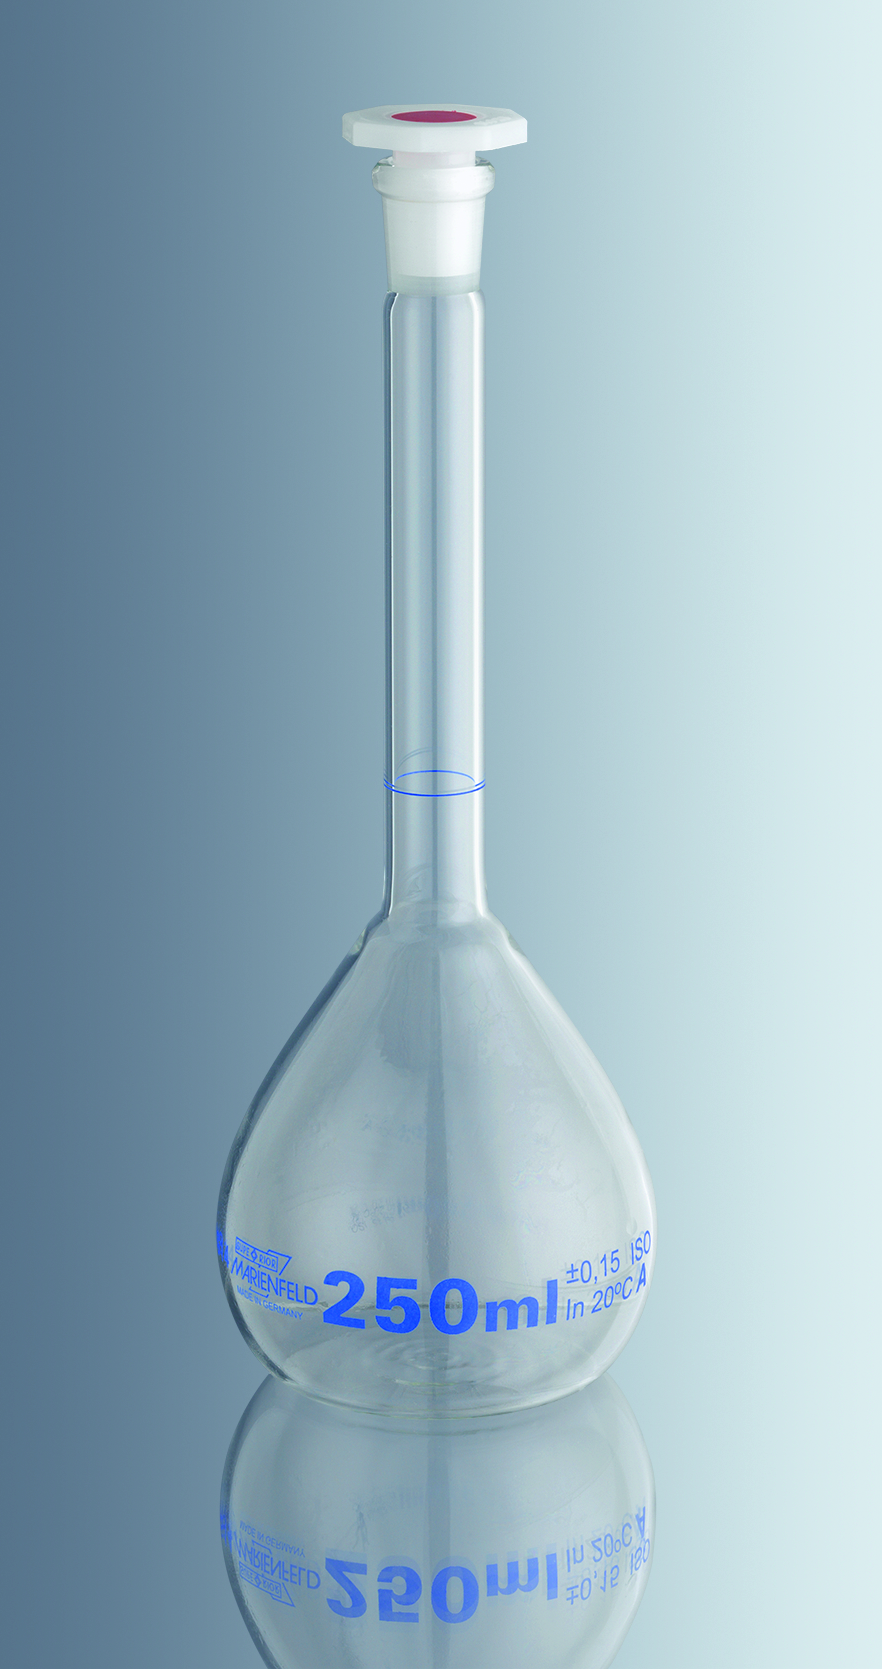 Marienfeld (Germany) Volumetric Flask Clear 25ml - Class A(Lot Certified) High quality Borosil.Glass